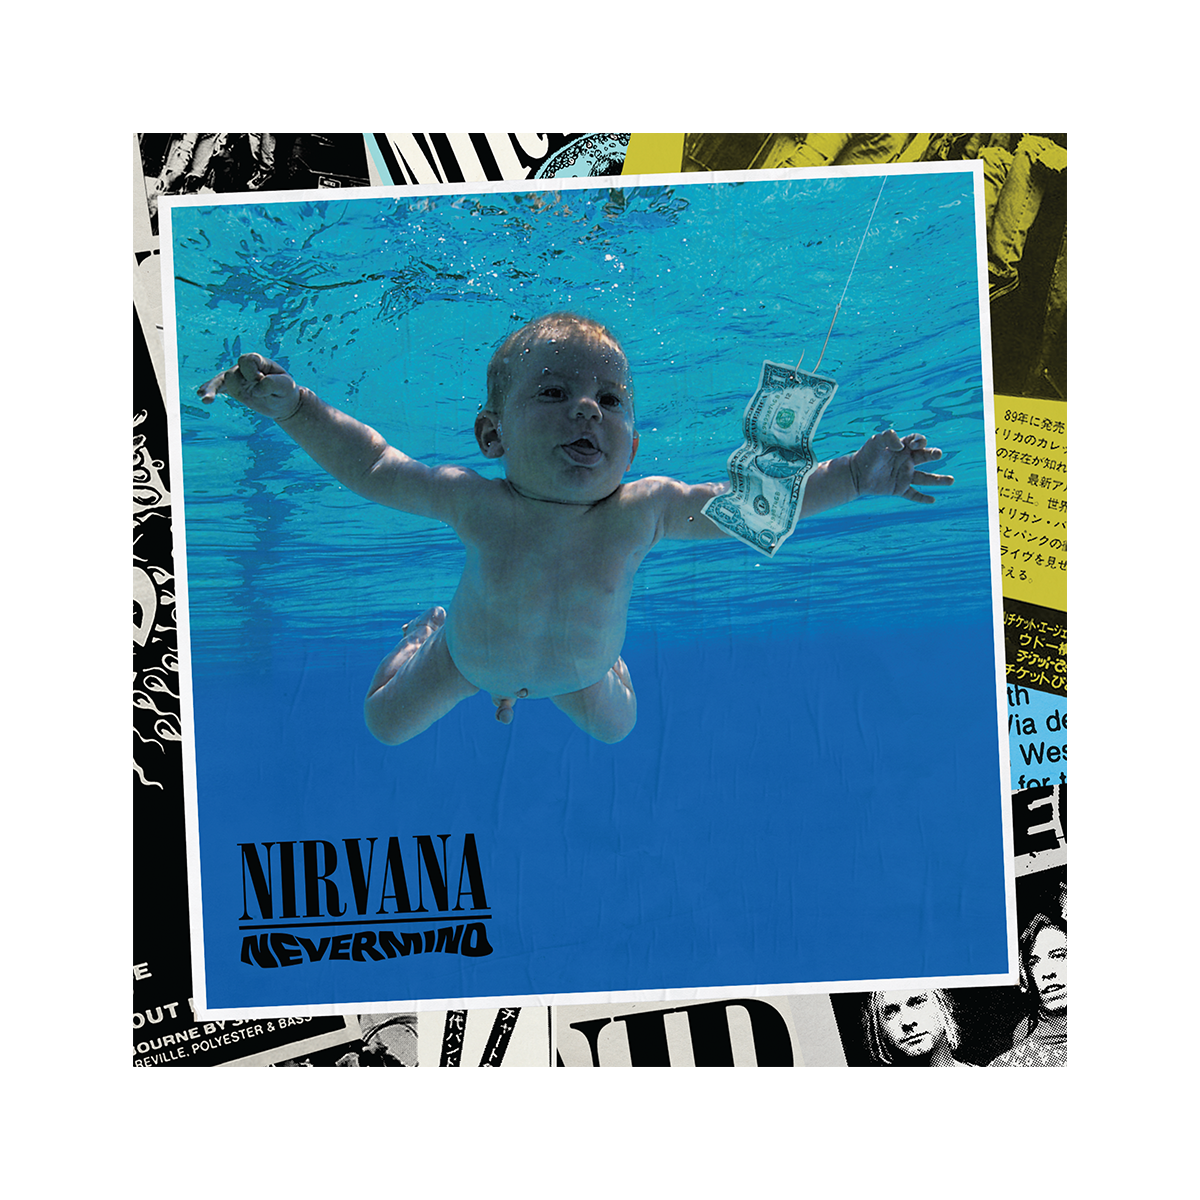 Nirvana - Nevermind - CD - DGC Club Version w/ Endless & Nameless - Mint -  Rare!